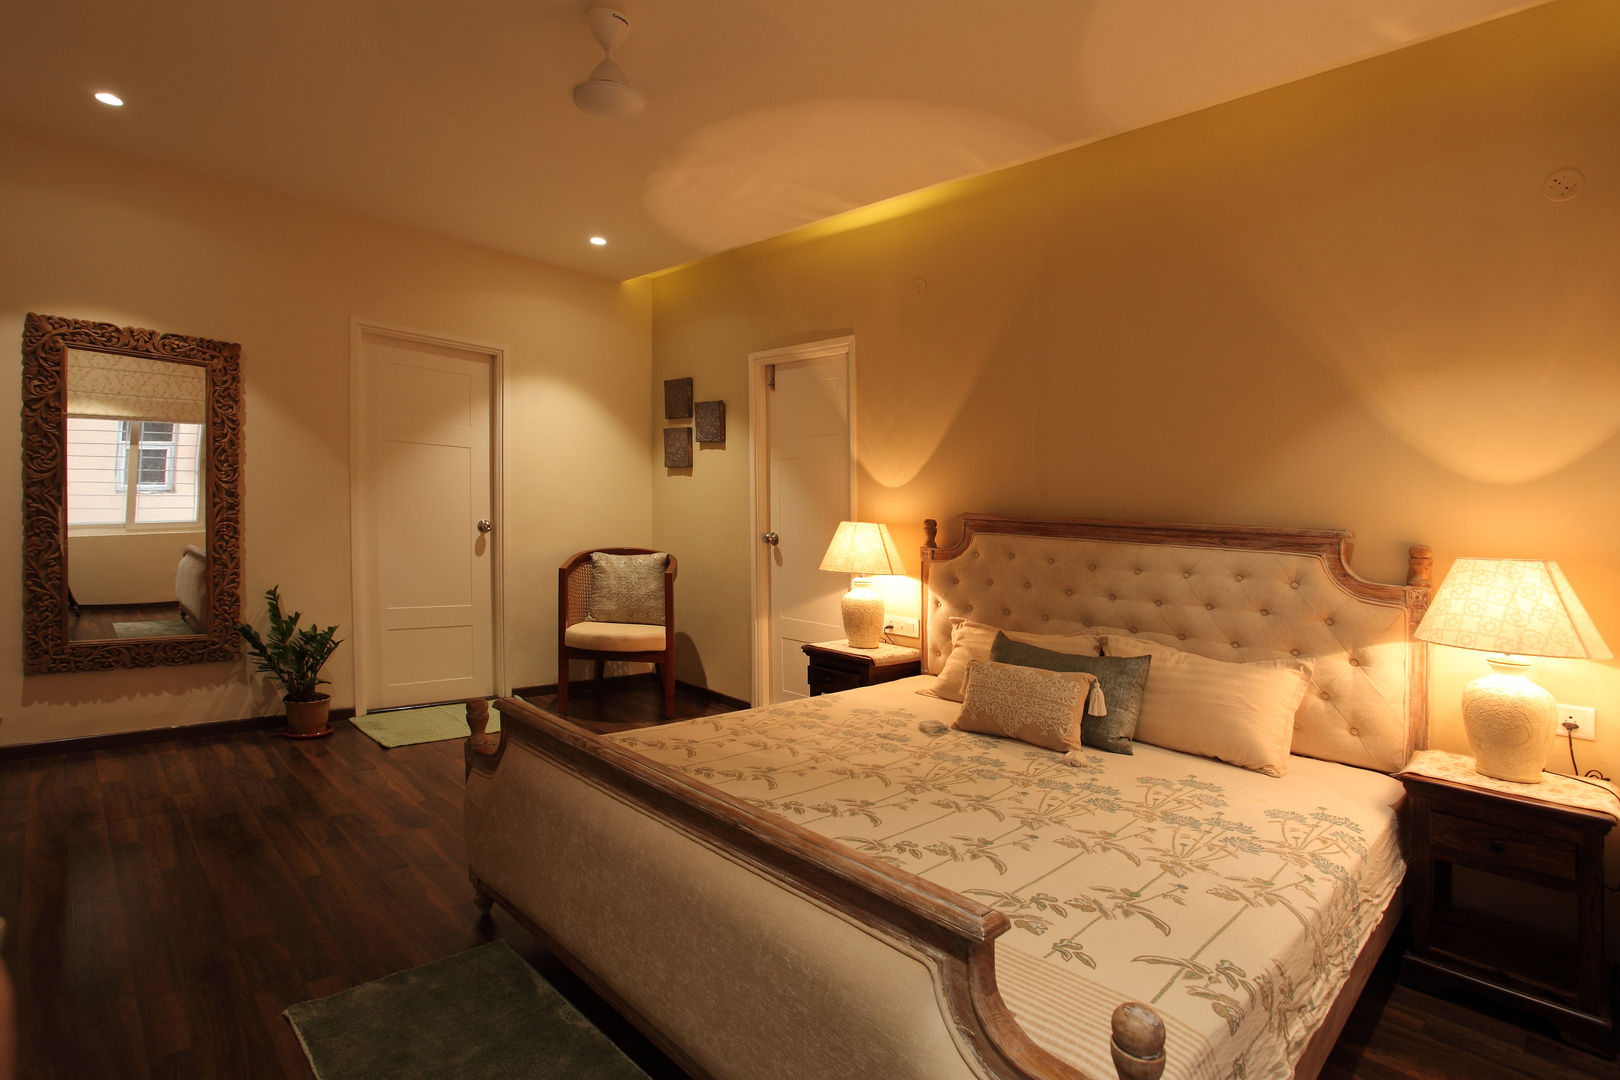 Apartment, Hyderabad, Saloni Narayankar Interiors Saloni Narayankar Interiors Chambre rustique Lits & têtes de lit